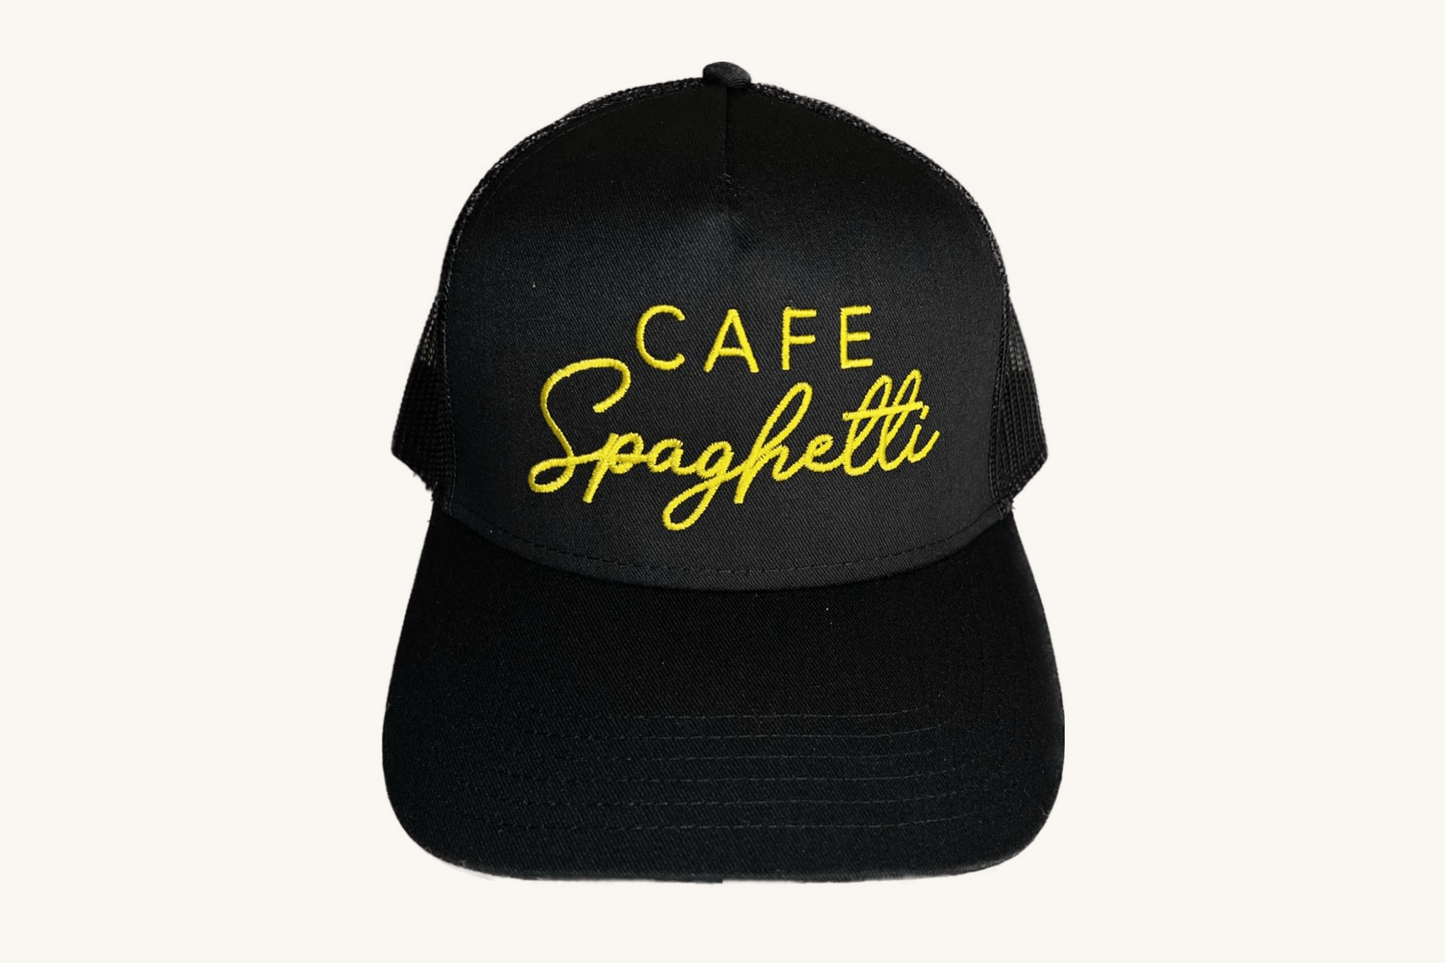 Cafe Spaghetti - Trucker Mesh Cap